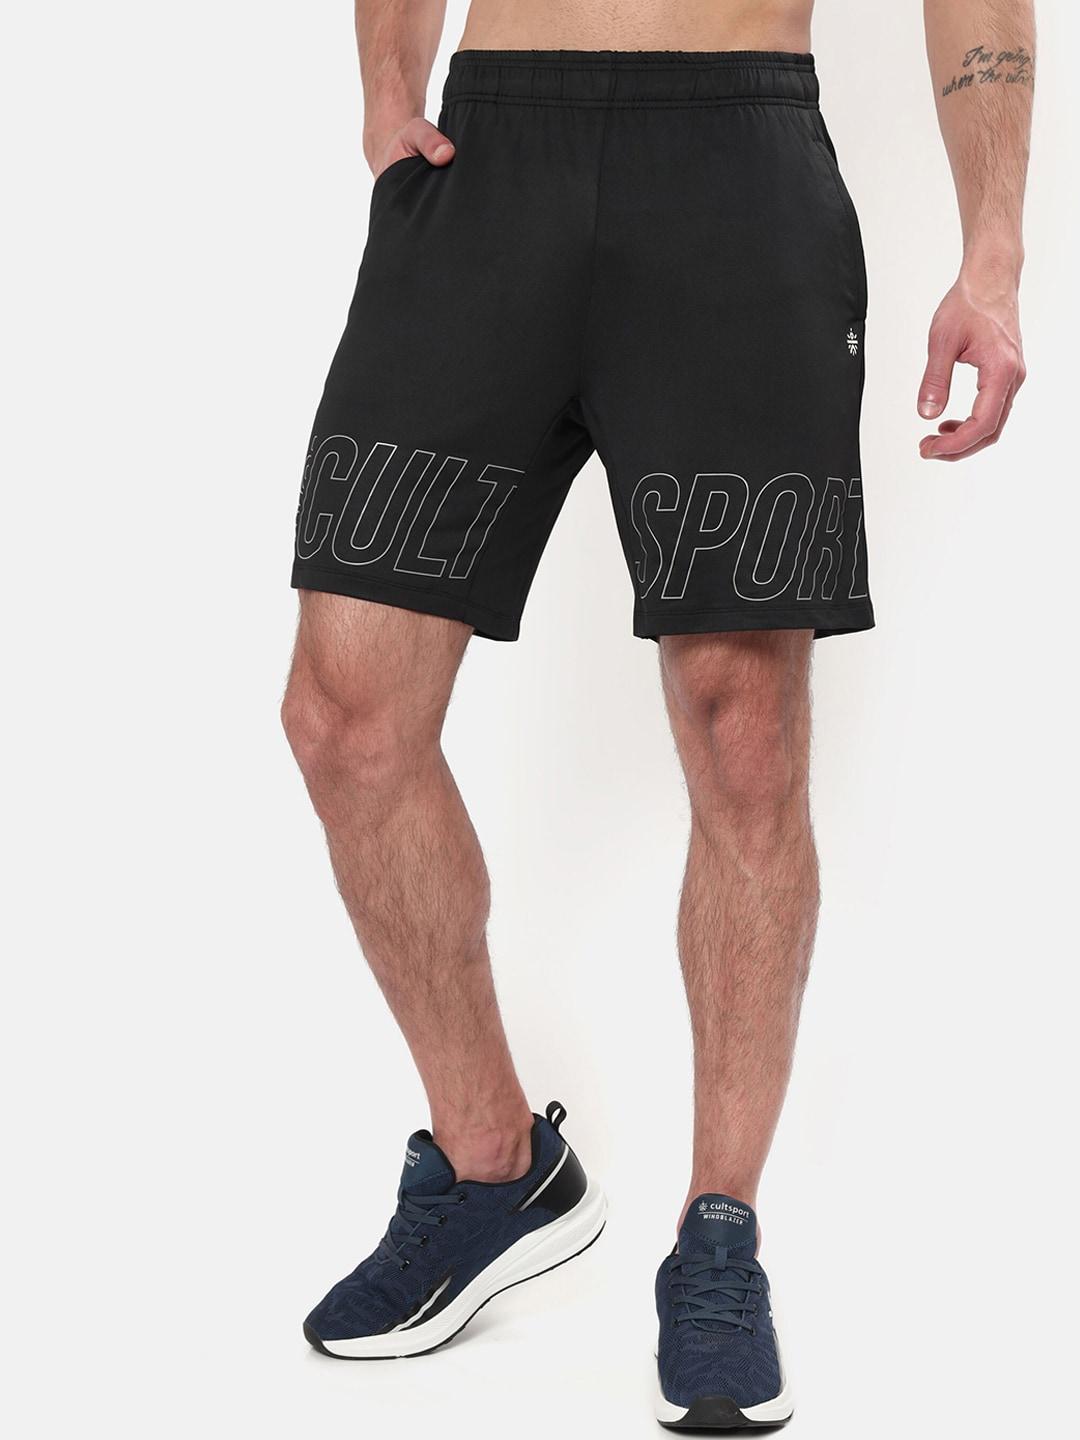 cultsport men black printed running sports shorts